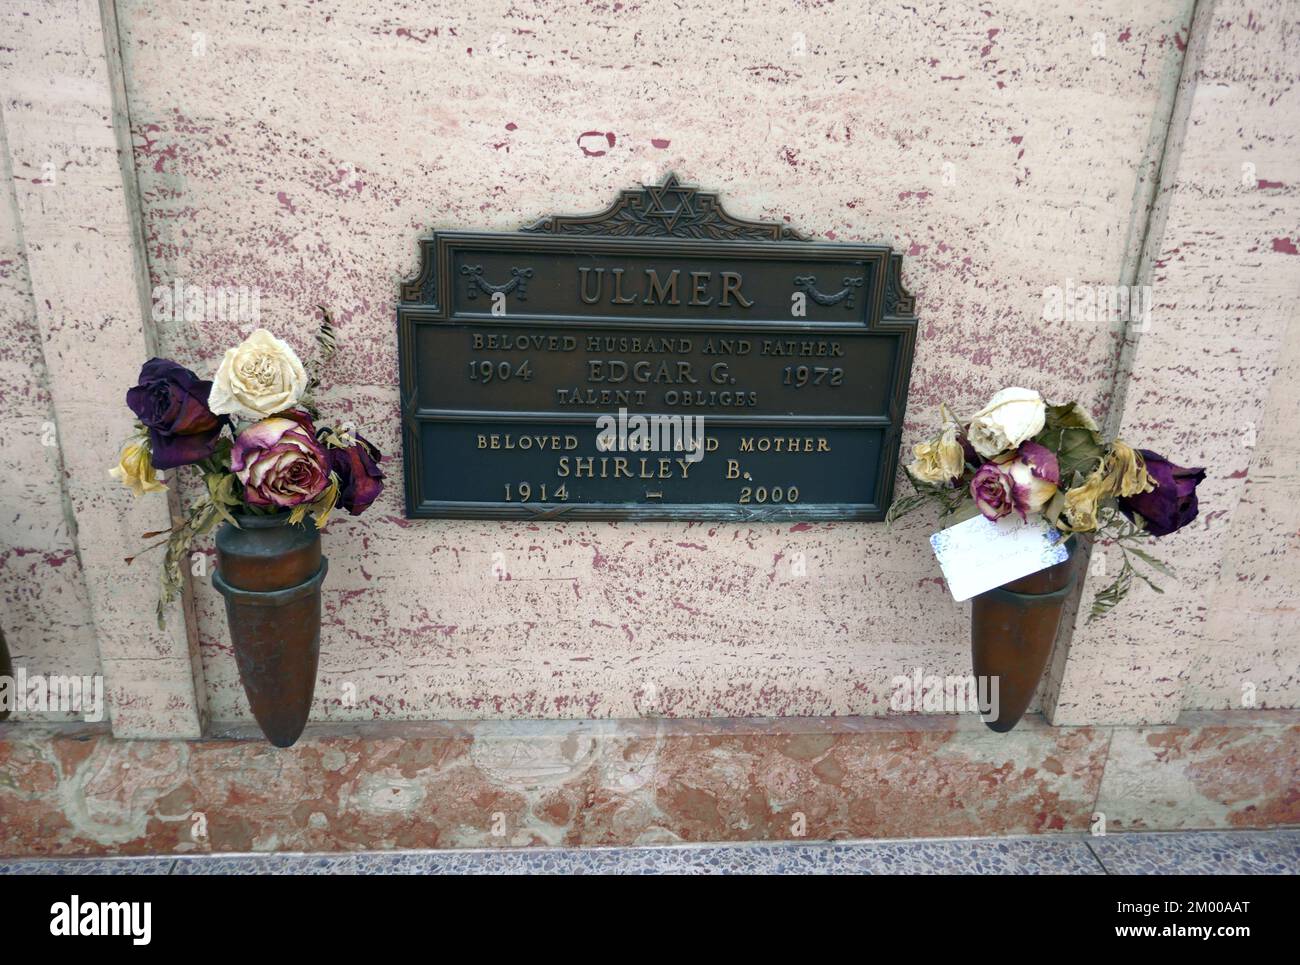 Los Angeles, Kalifornien, USA 18.. Oktober 2022 Regisseur Edgar G. Ulmer's Grave in Hall of David auf dem Hollywood Forever Cemetery am 18. Oktober 2022 in Los Angeles, Kalifornien, USA. Foto: Barry King/Alamy Stock Photo Stockfoto